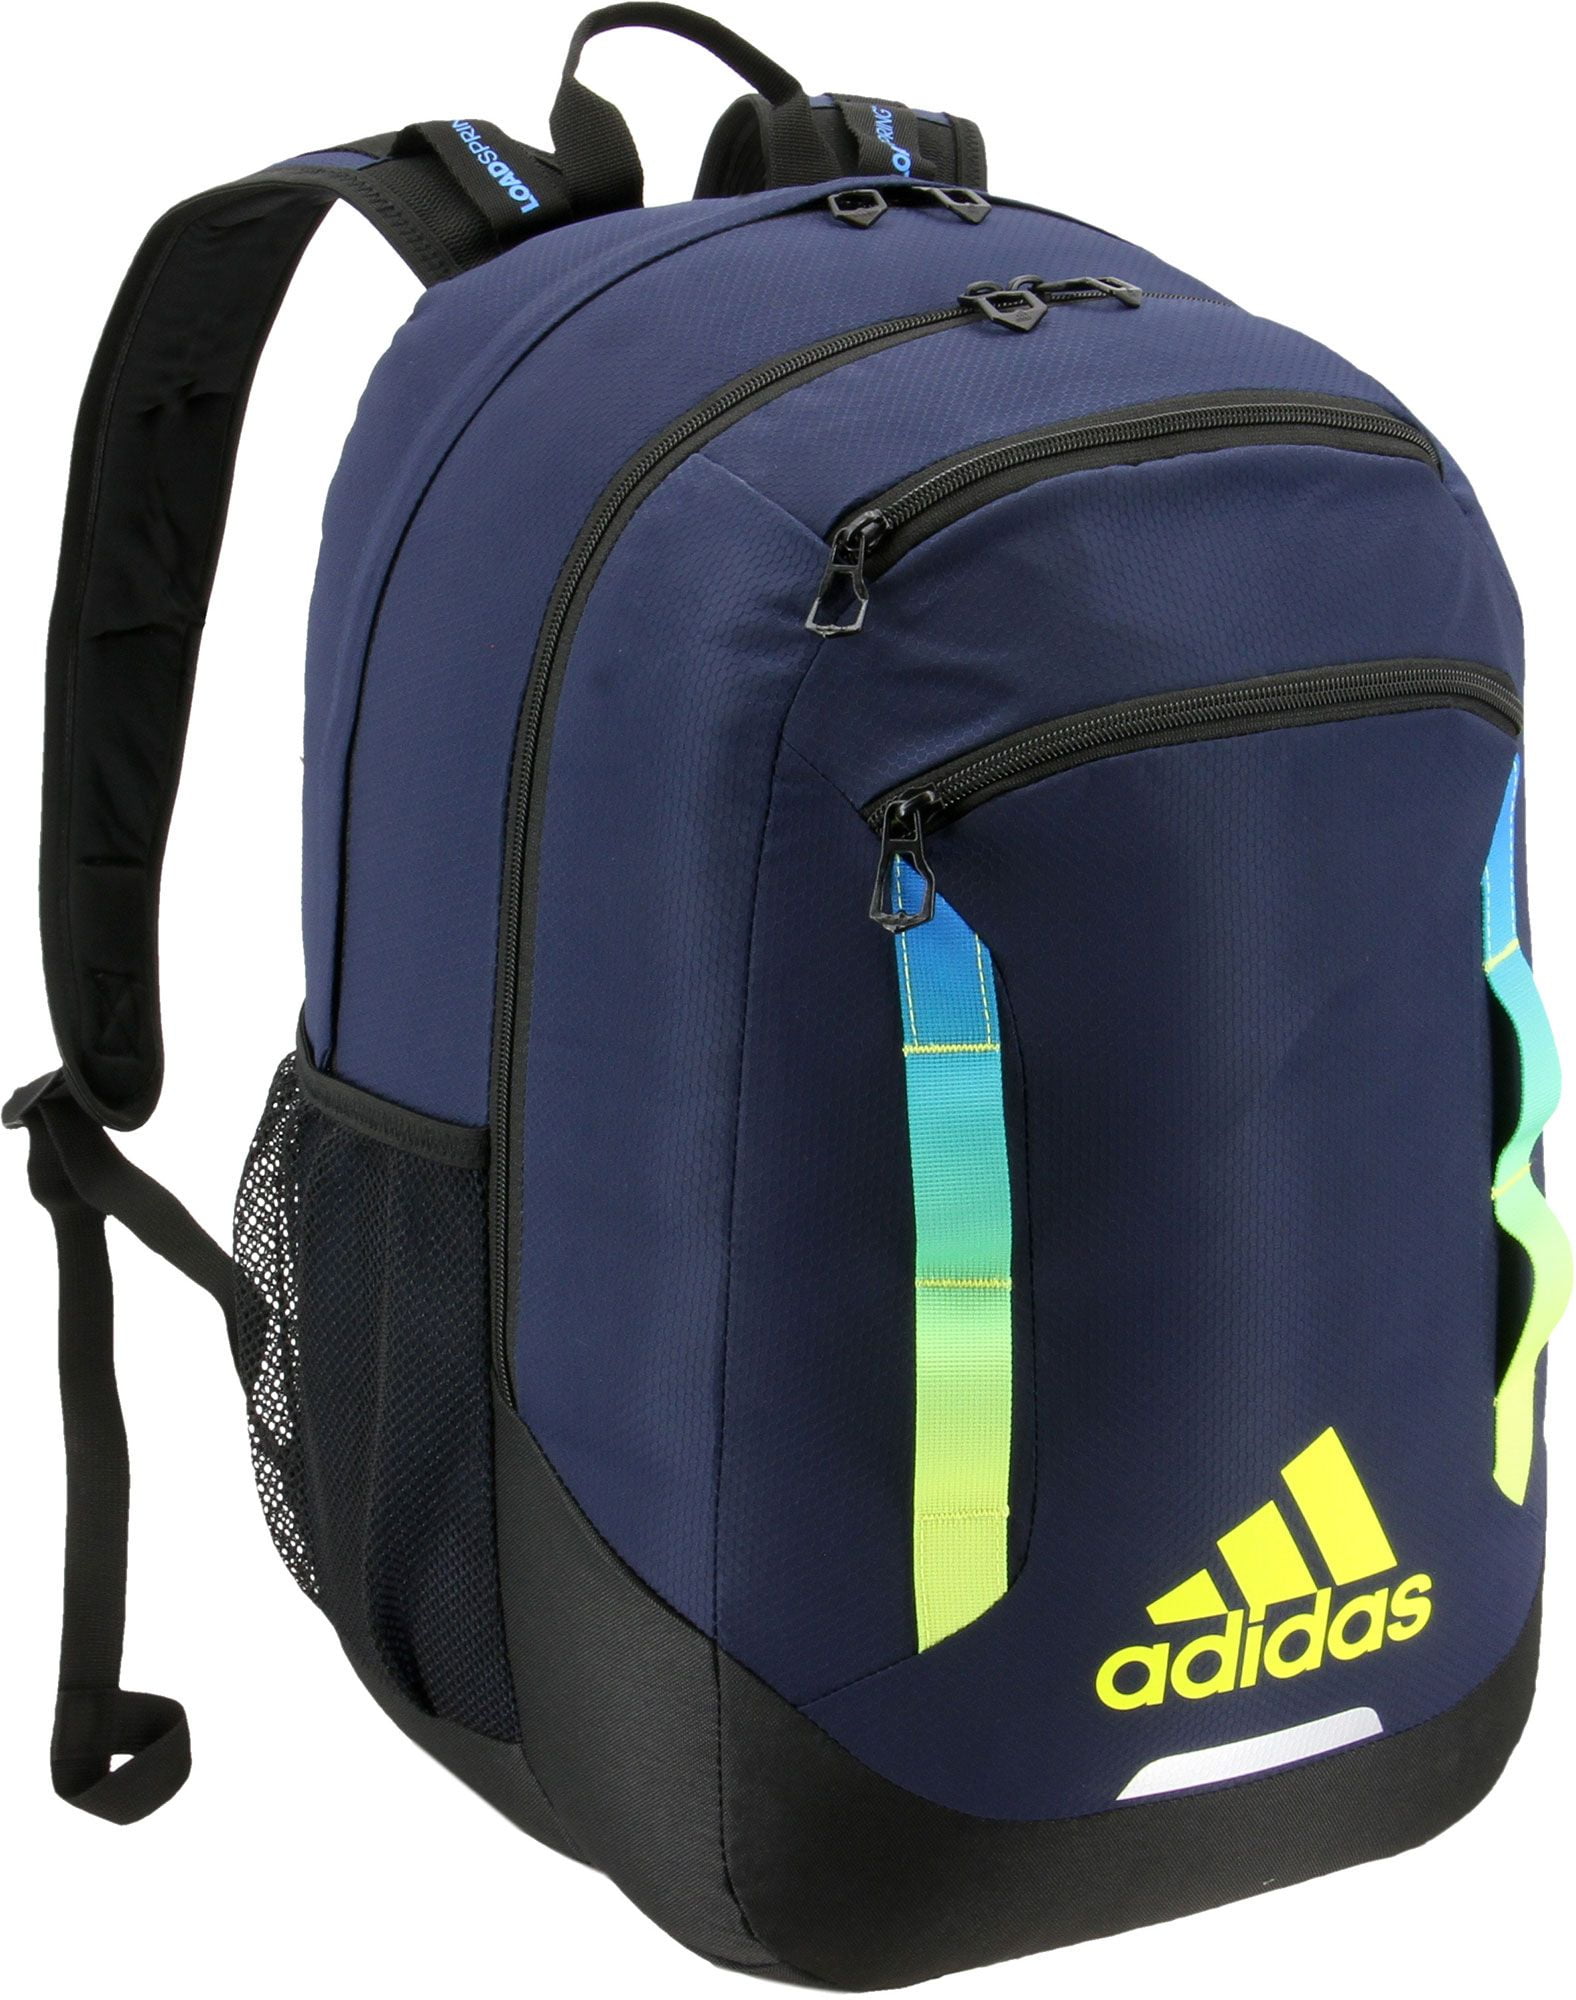 rival backpack adidas